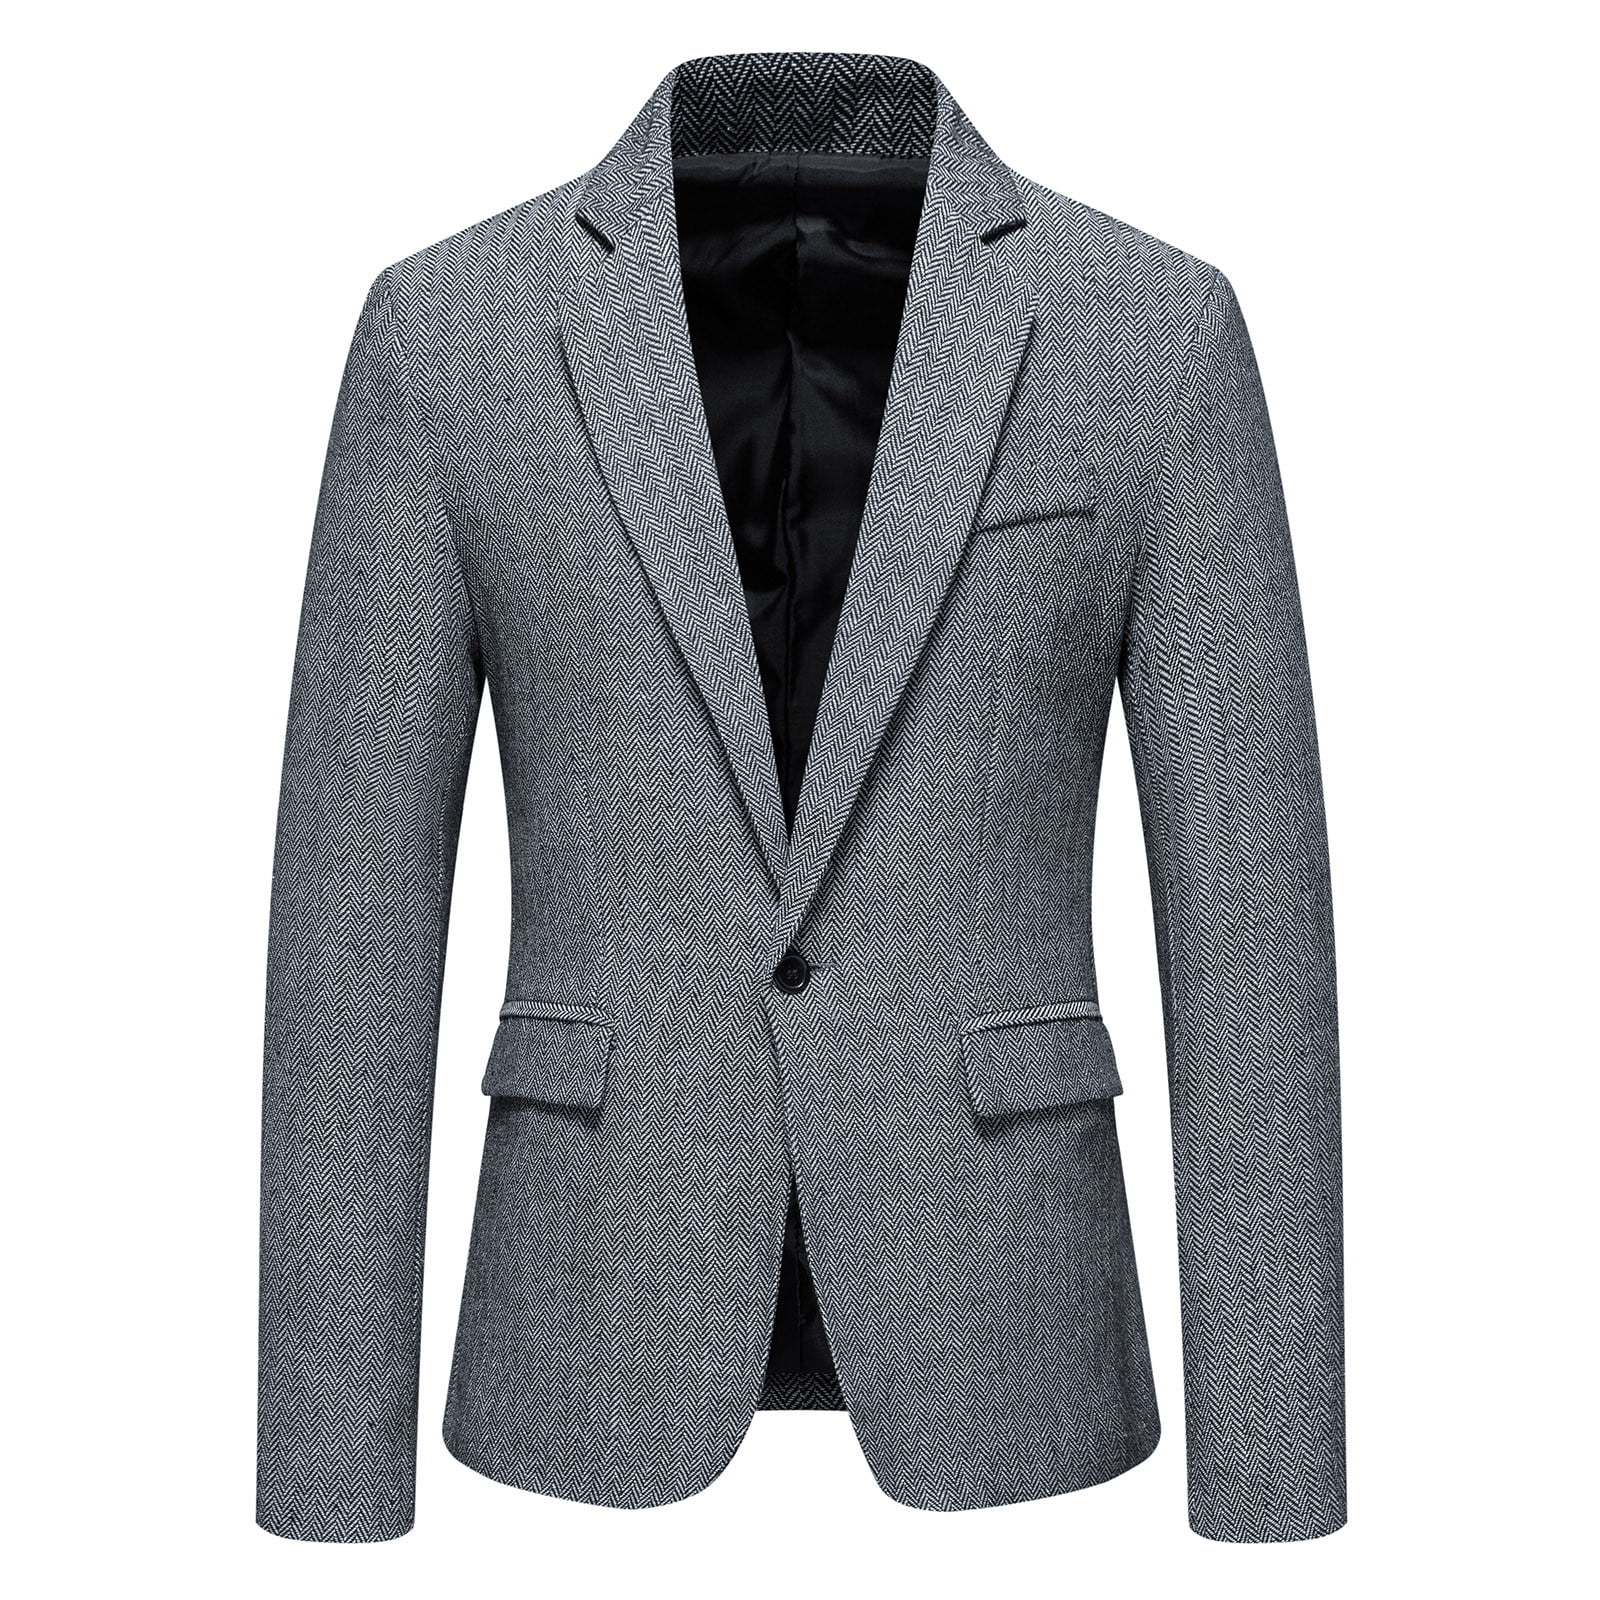 Lanhui Men's Single Button Casual Business Solid Color Herringbone Suit ...